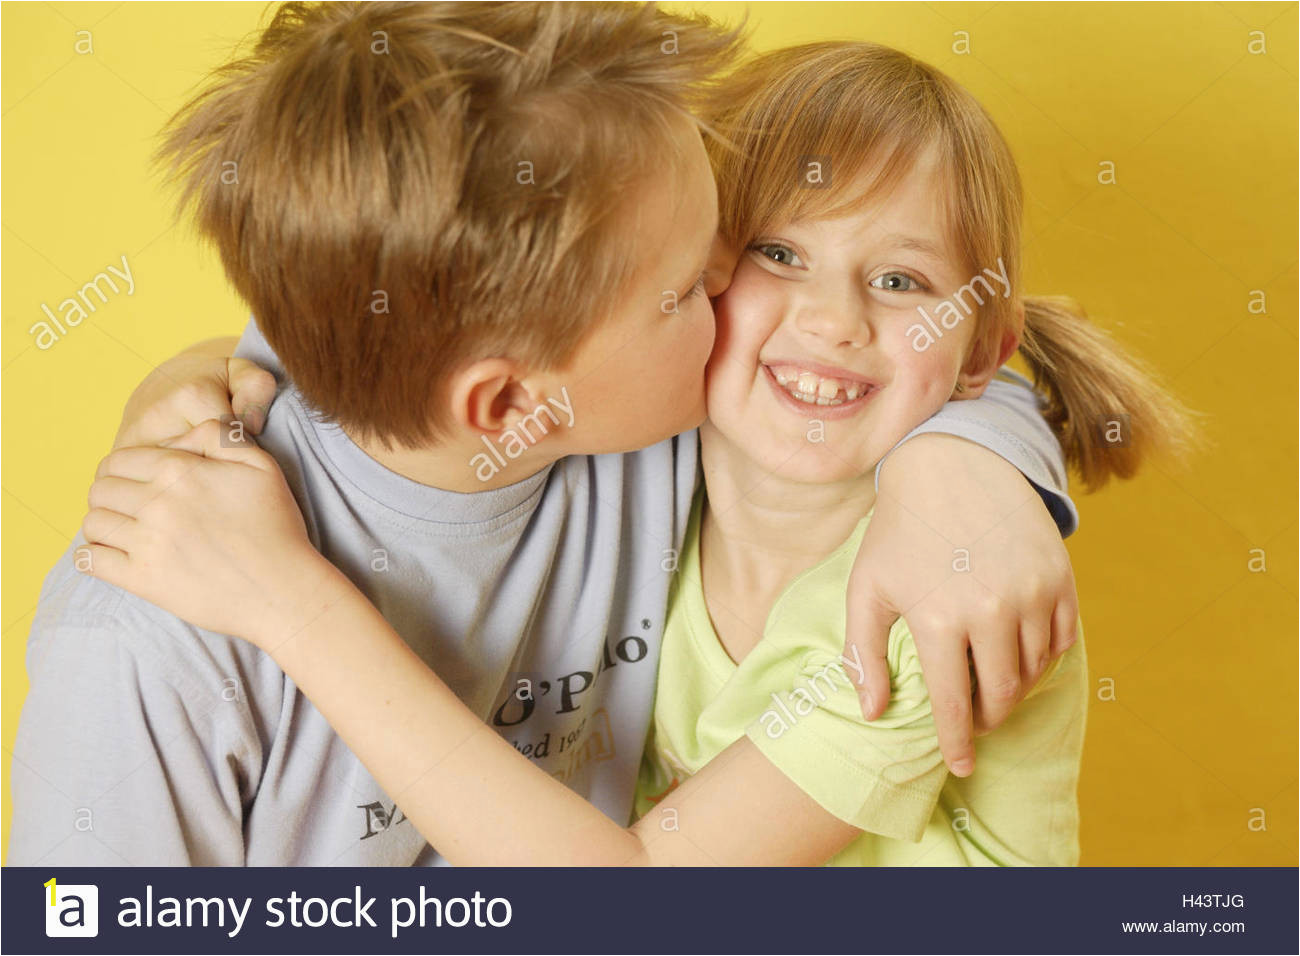 boy girl siblings kiss cheek portrait curled H43TJG